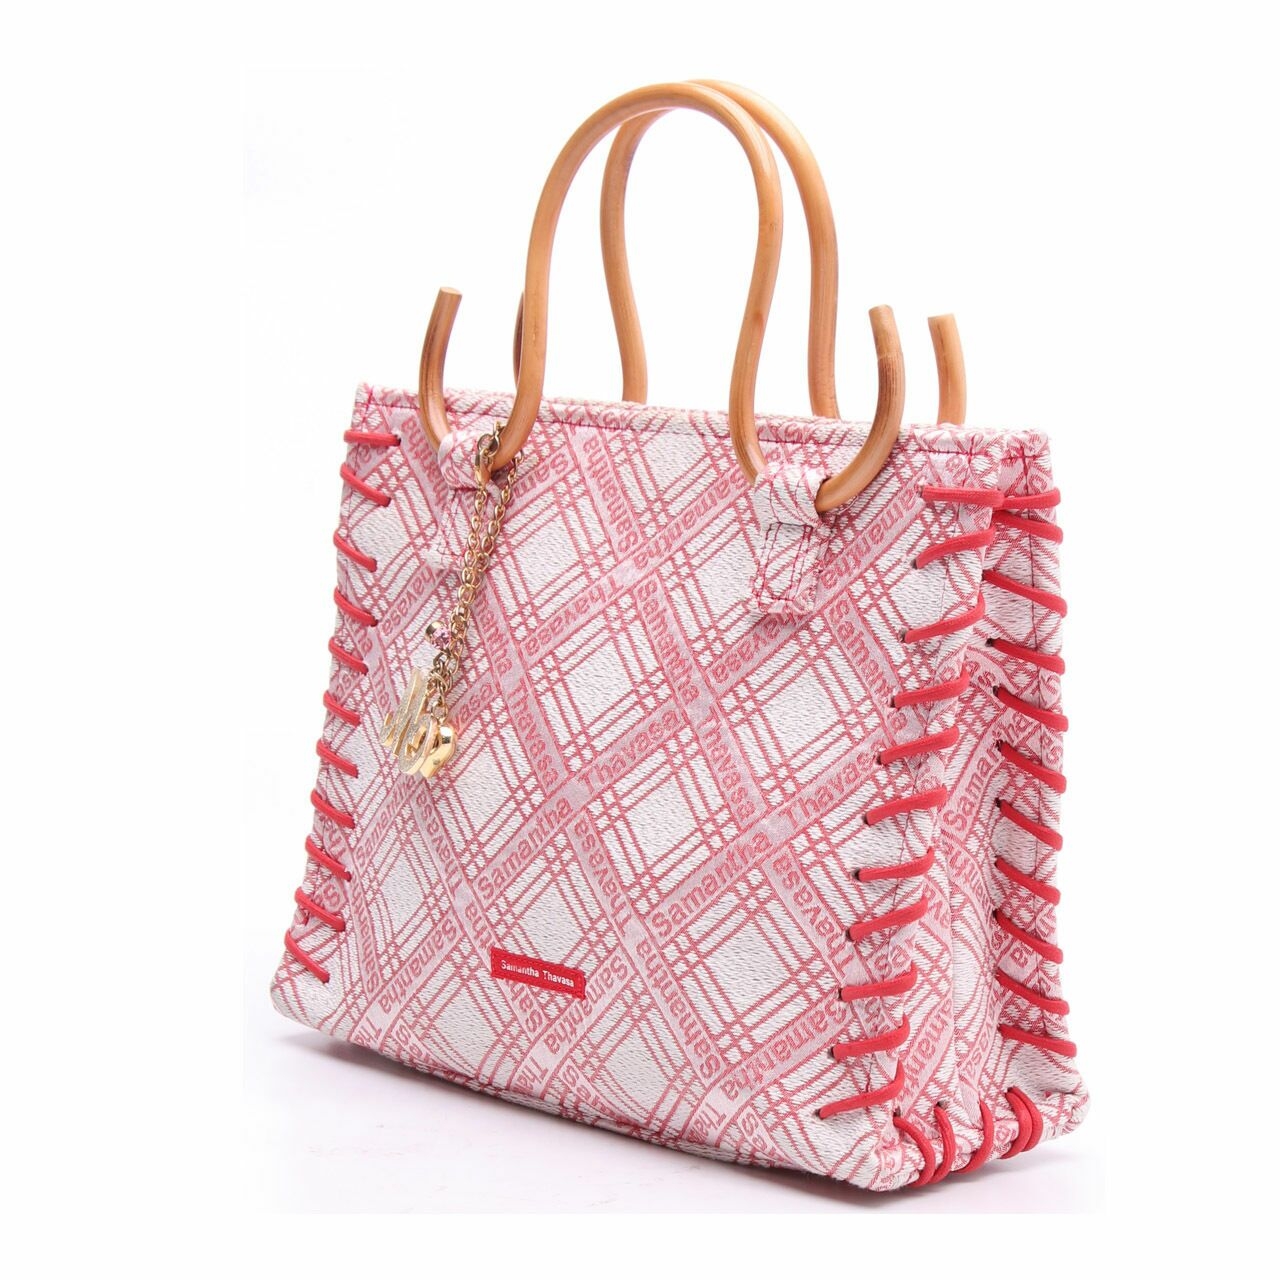 Samantha Thavasa Red & White Patterned Handbag